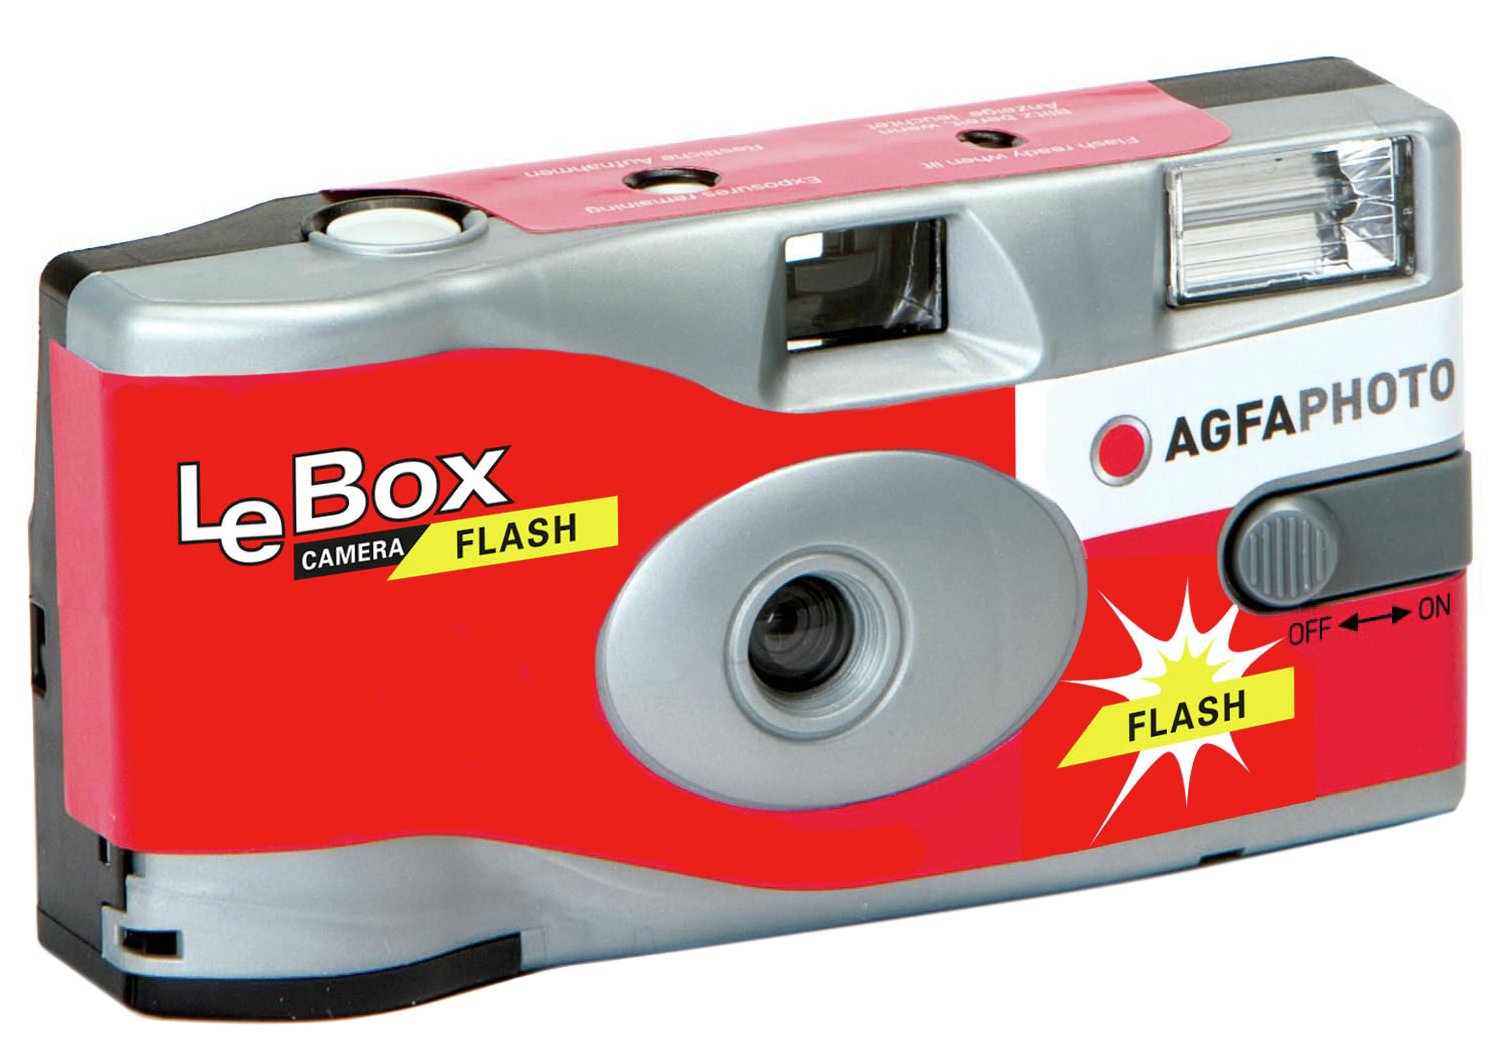 AGFA Single Use 27 Exposure Camera Review